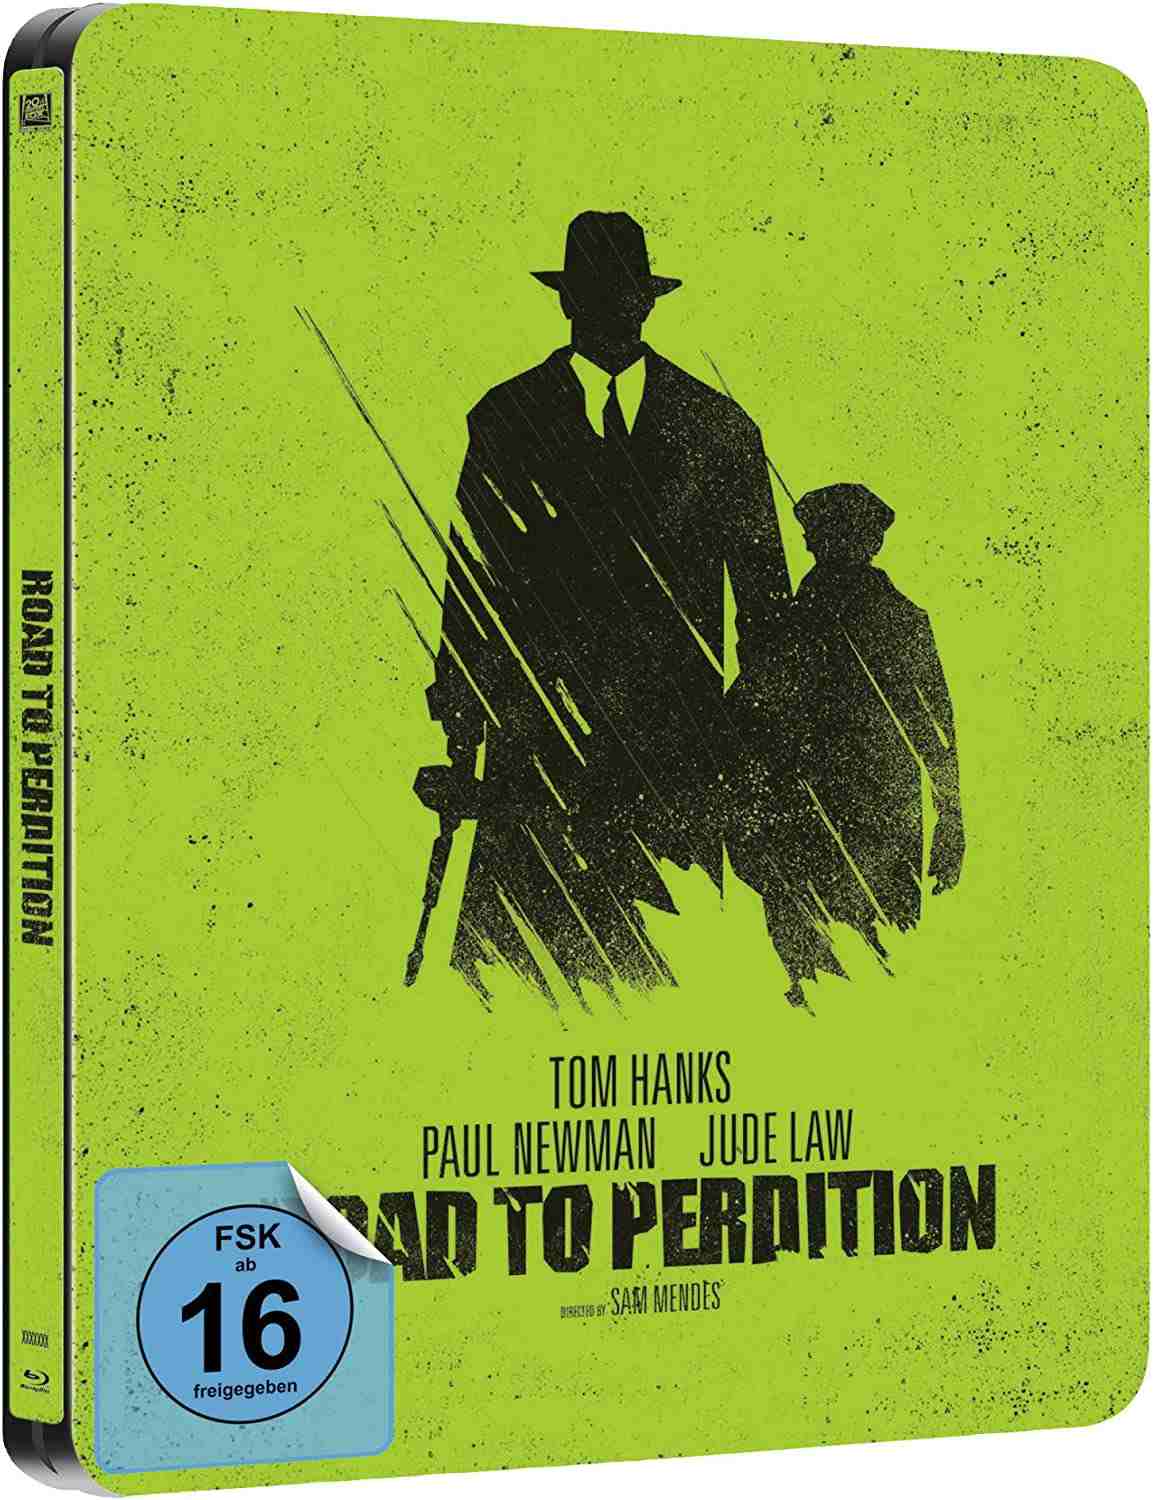 Road to Perdition (Cesta do zatracení) - Blu-ray Steelbook